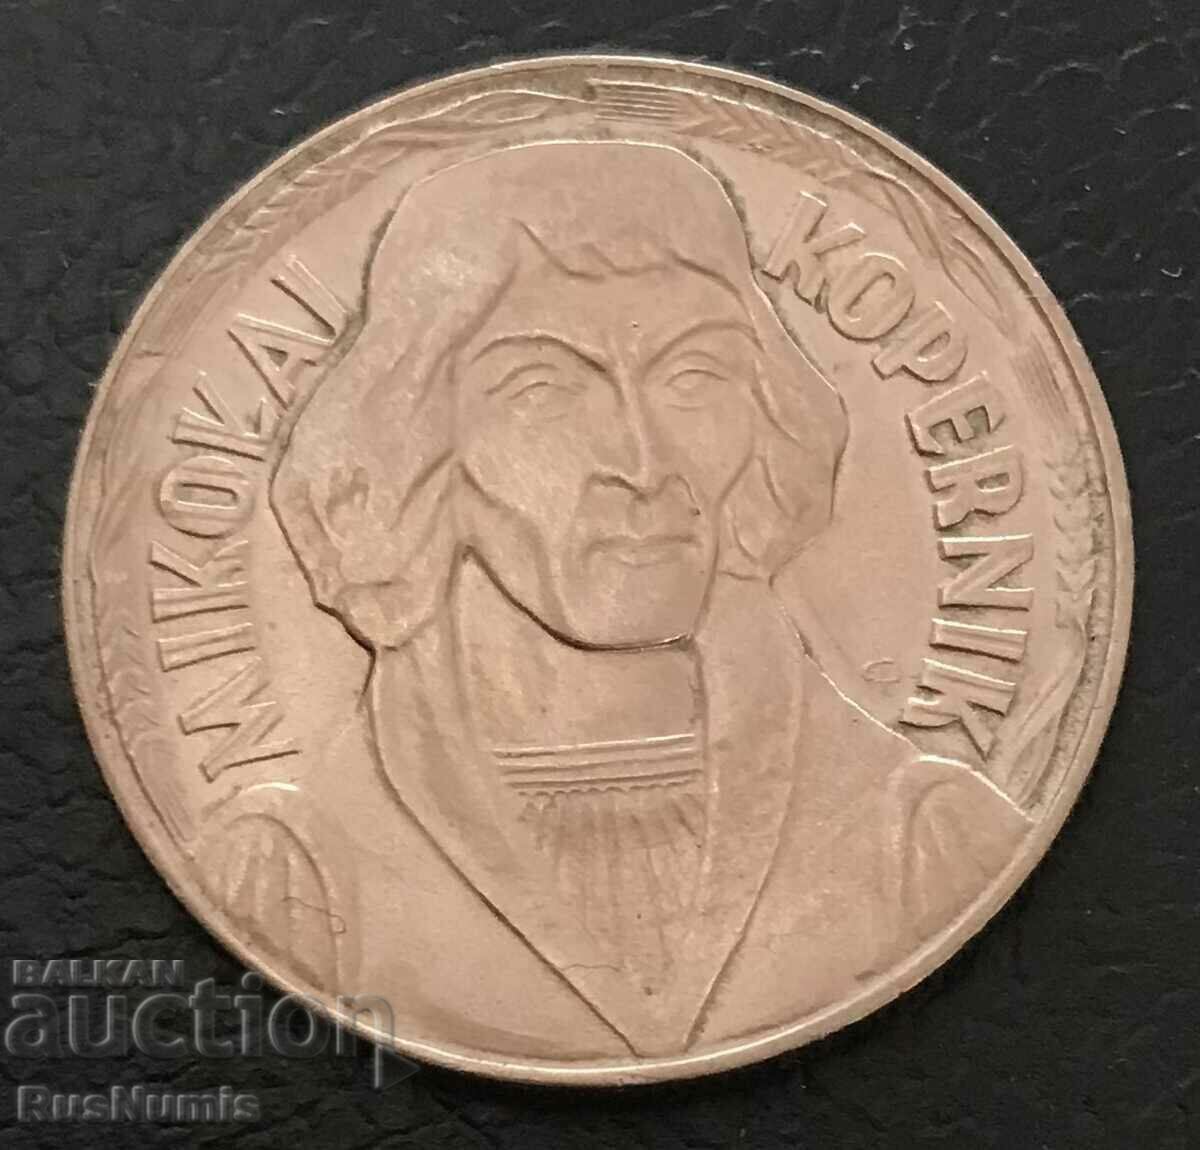 Poland. 10 zlotys 1968 Nicolaus Copernicus. UNC.